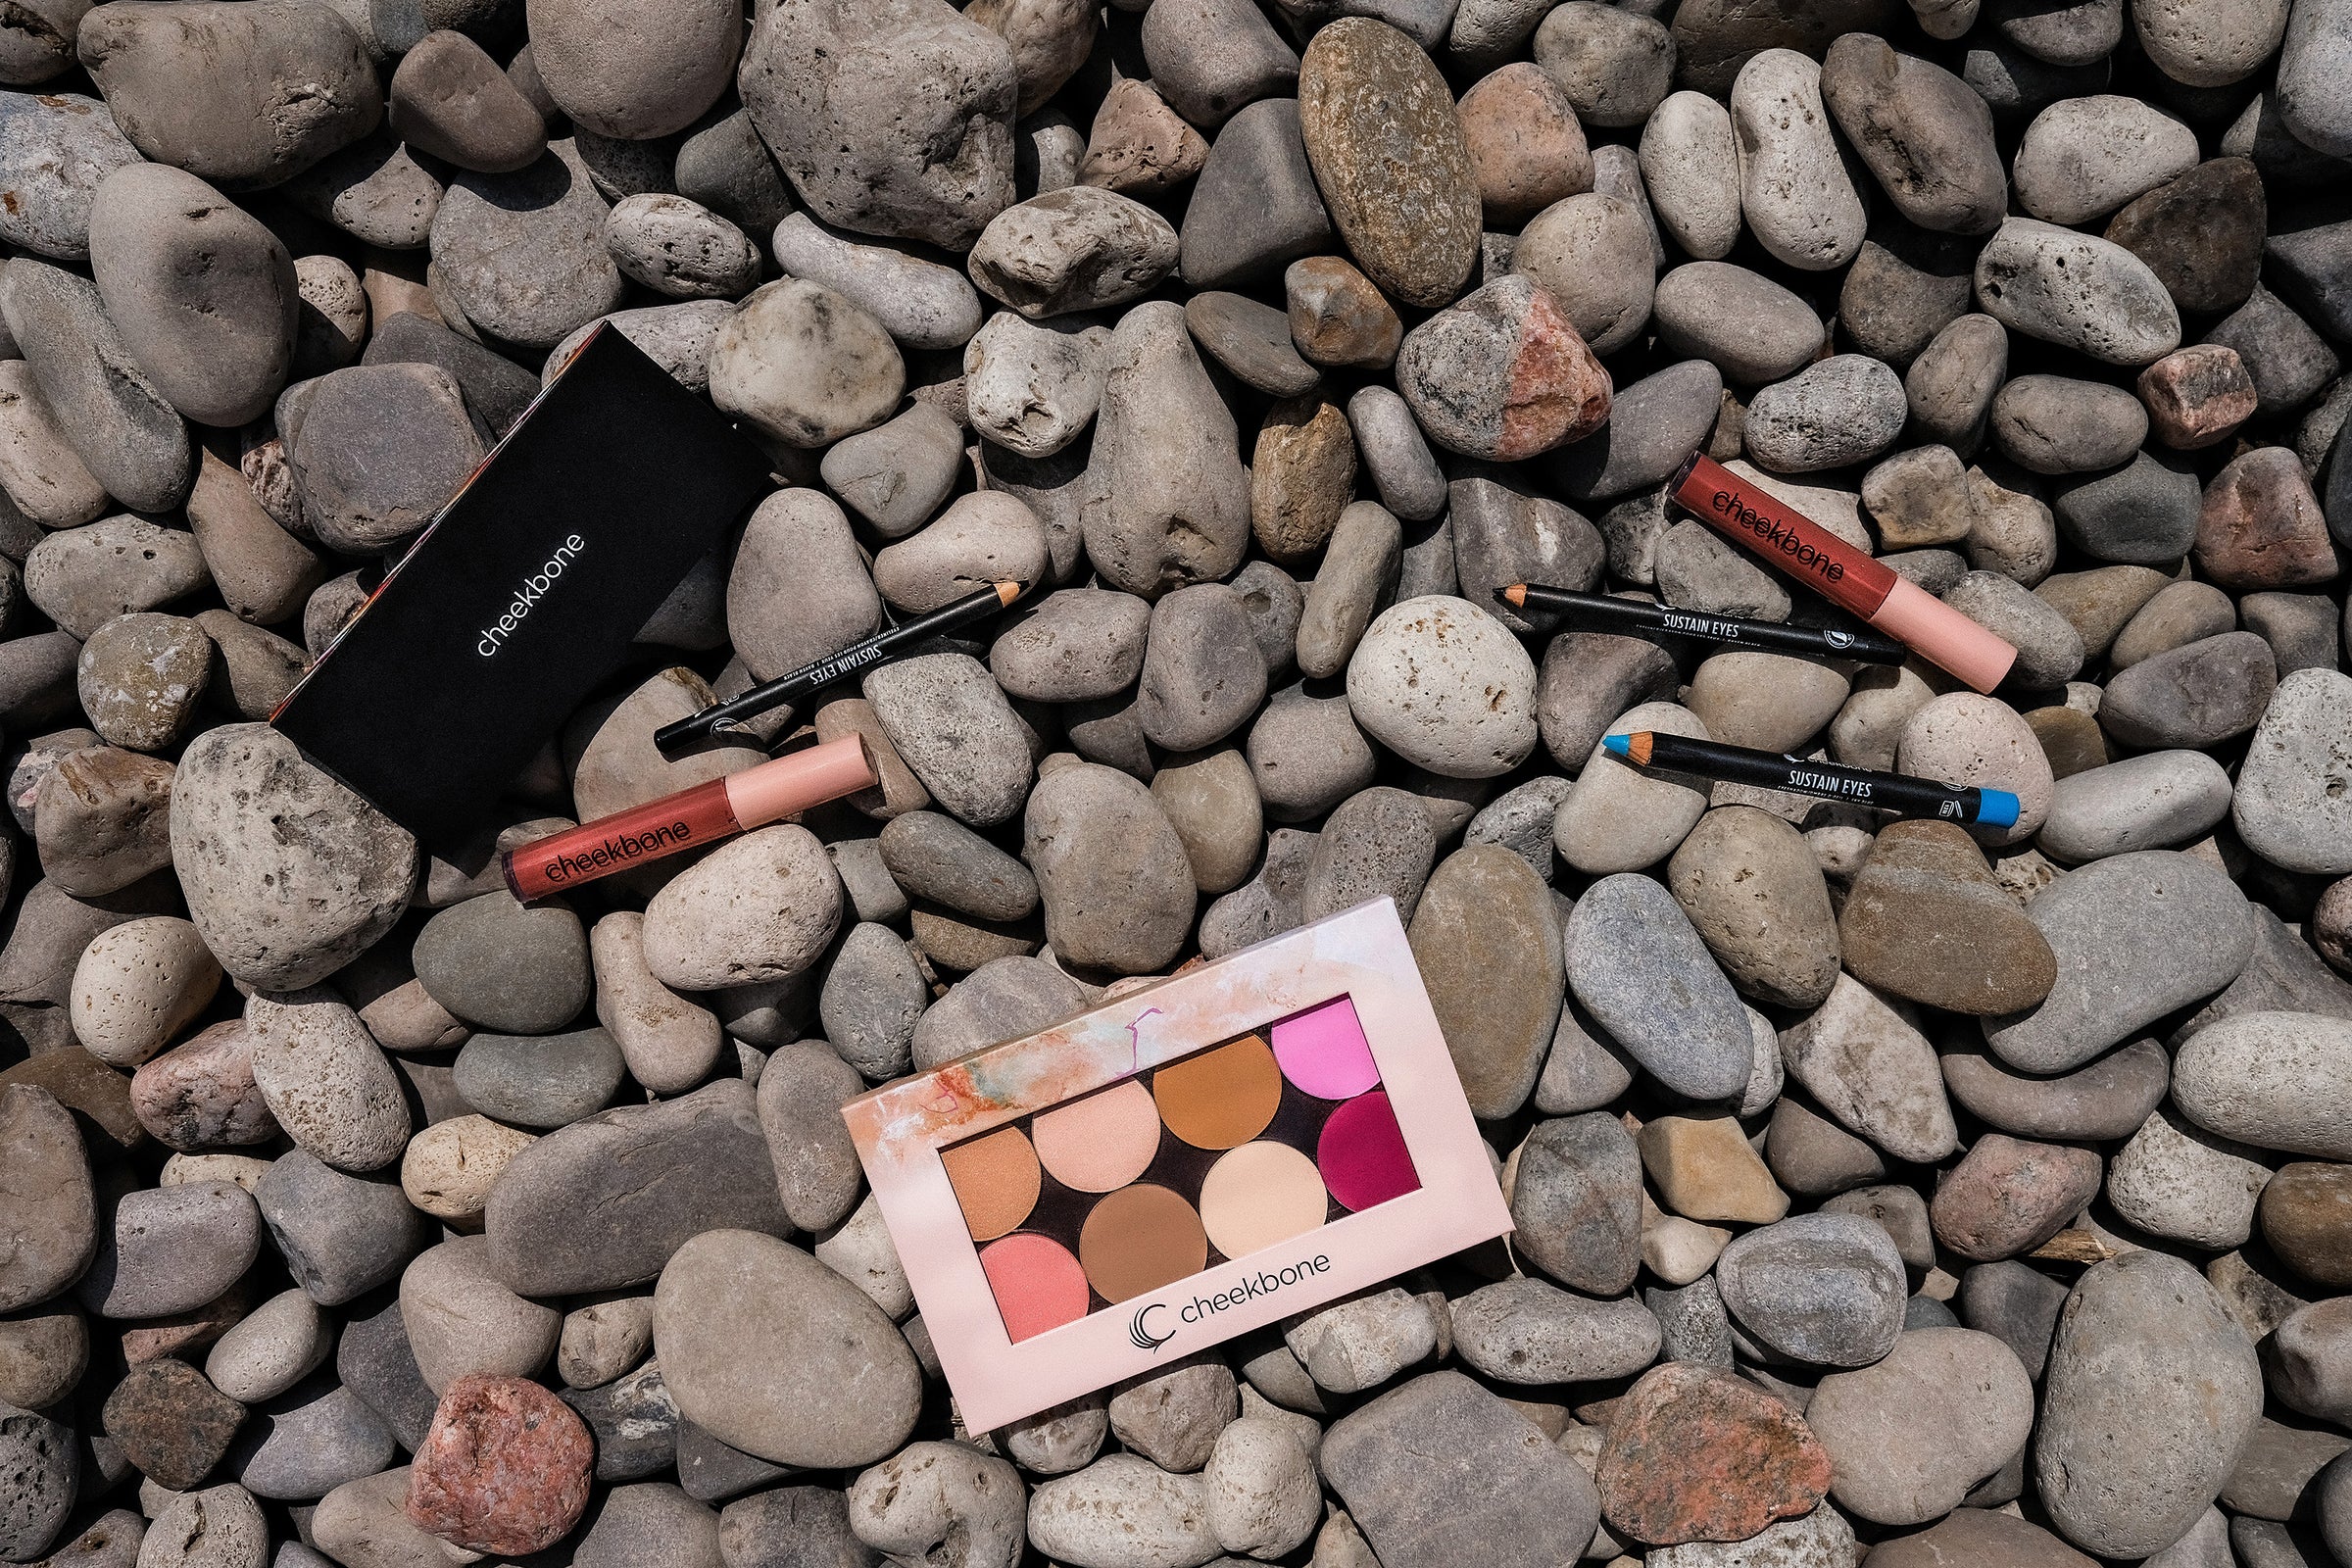 Episode 201: Jenn Harper  CEO & Founder of Cheekbone Beauty — Powerful  Ladies